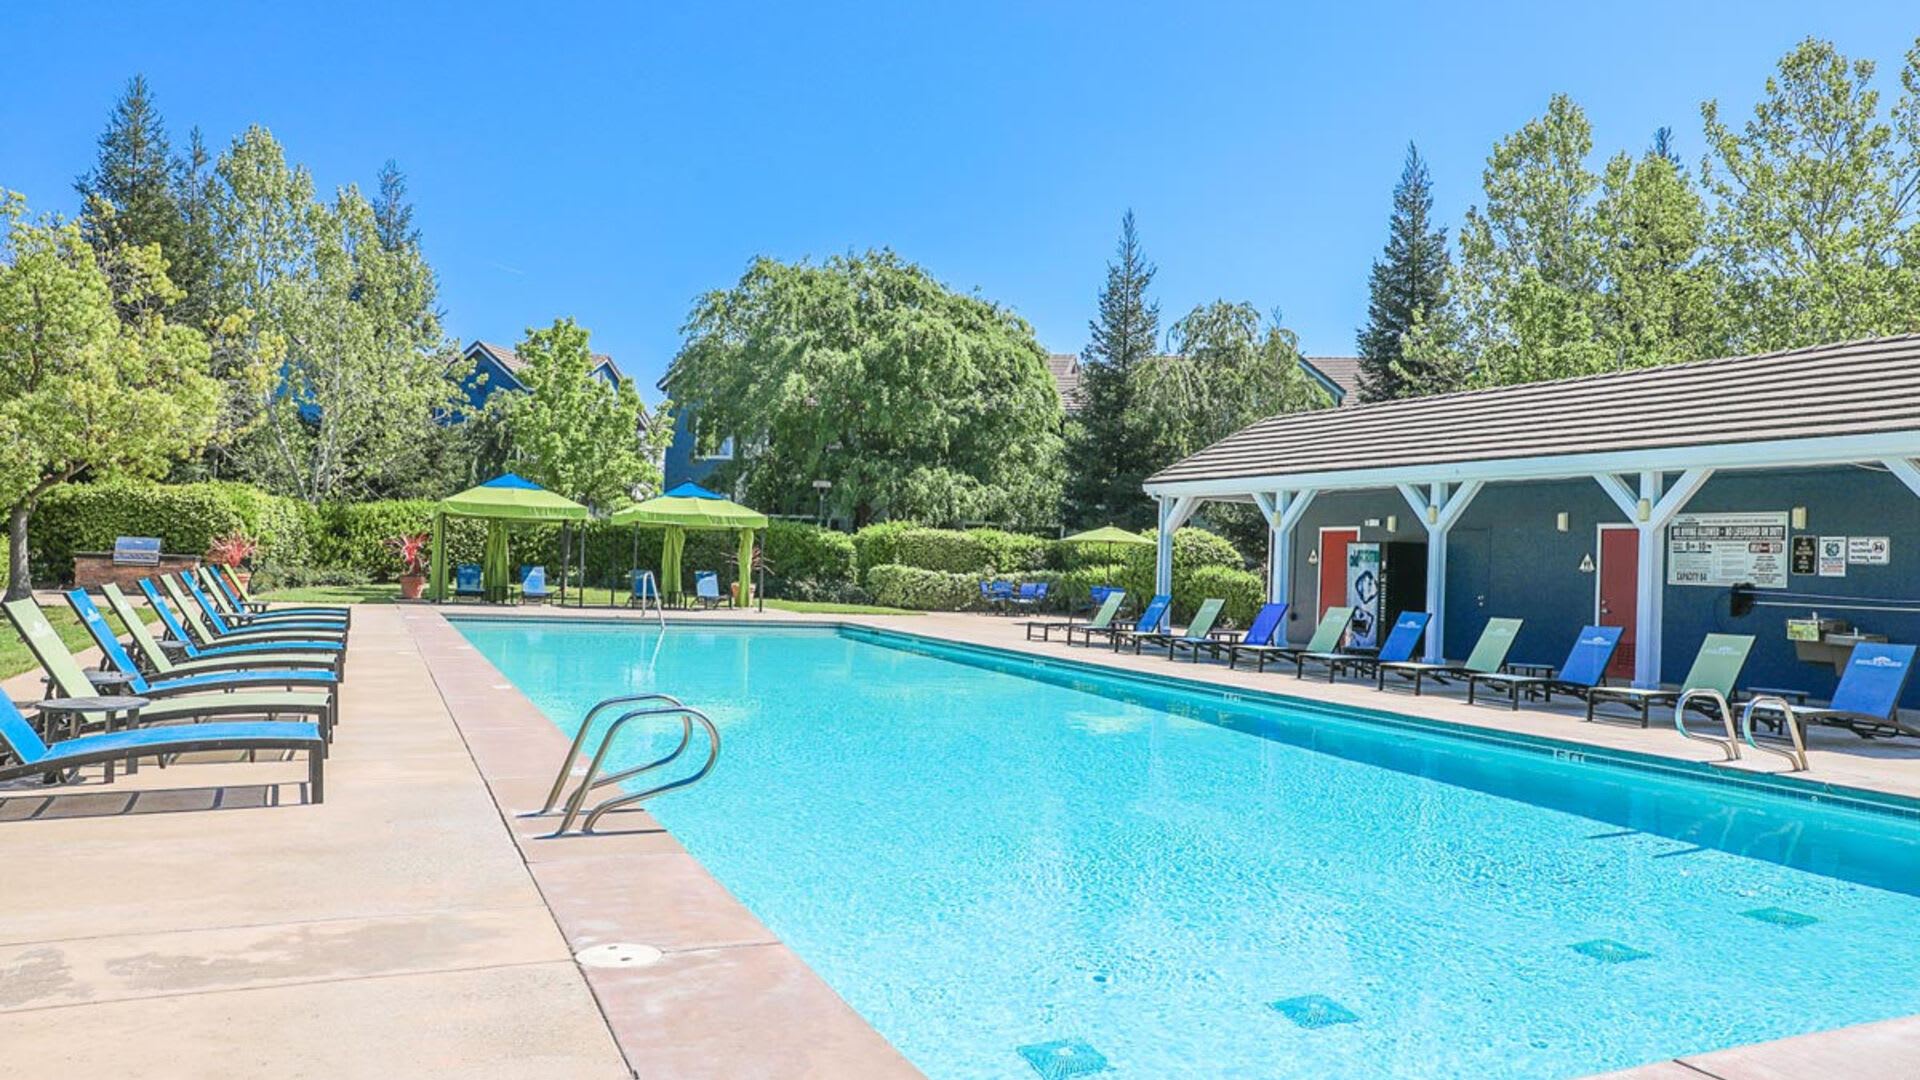 Swimming pool at Rocklin Ranch Apartments in Rocklin, California